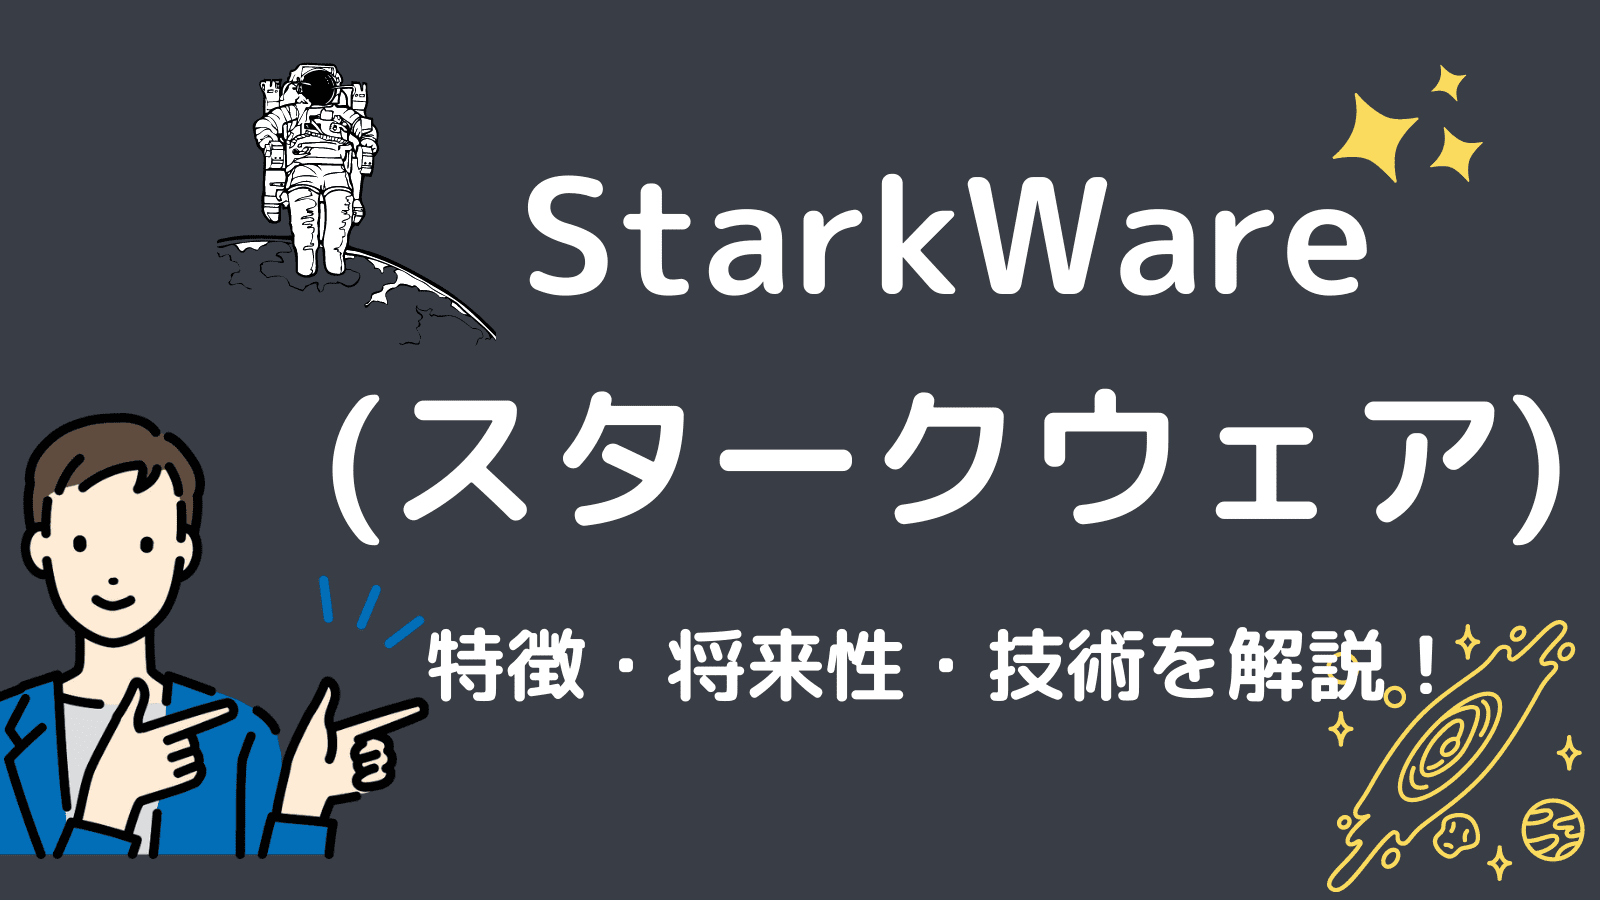 StarkWare(スタークウェア)